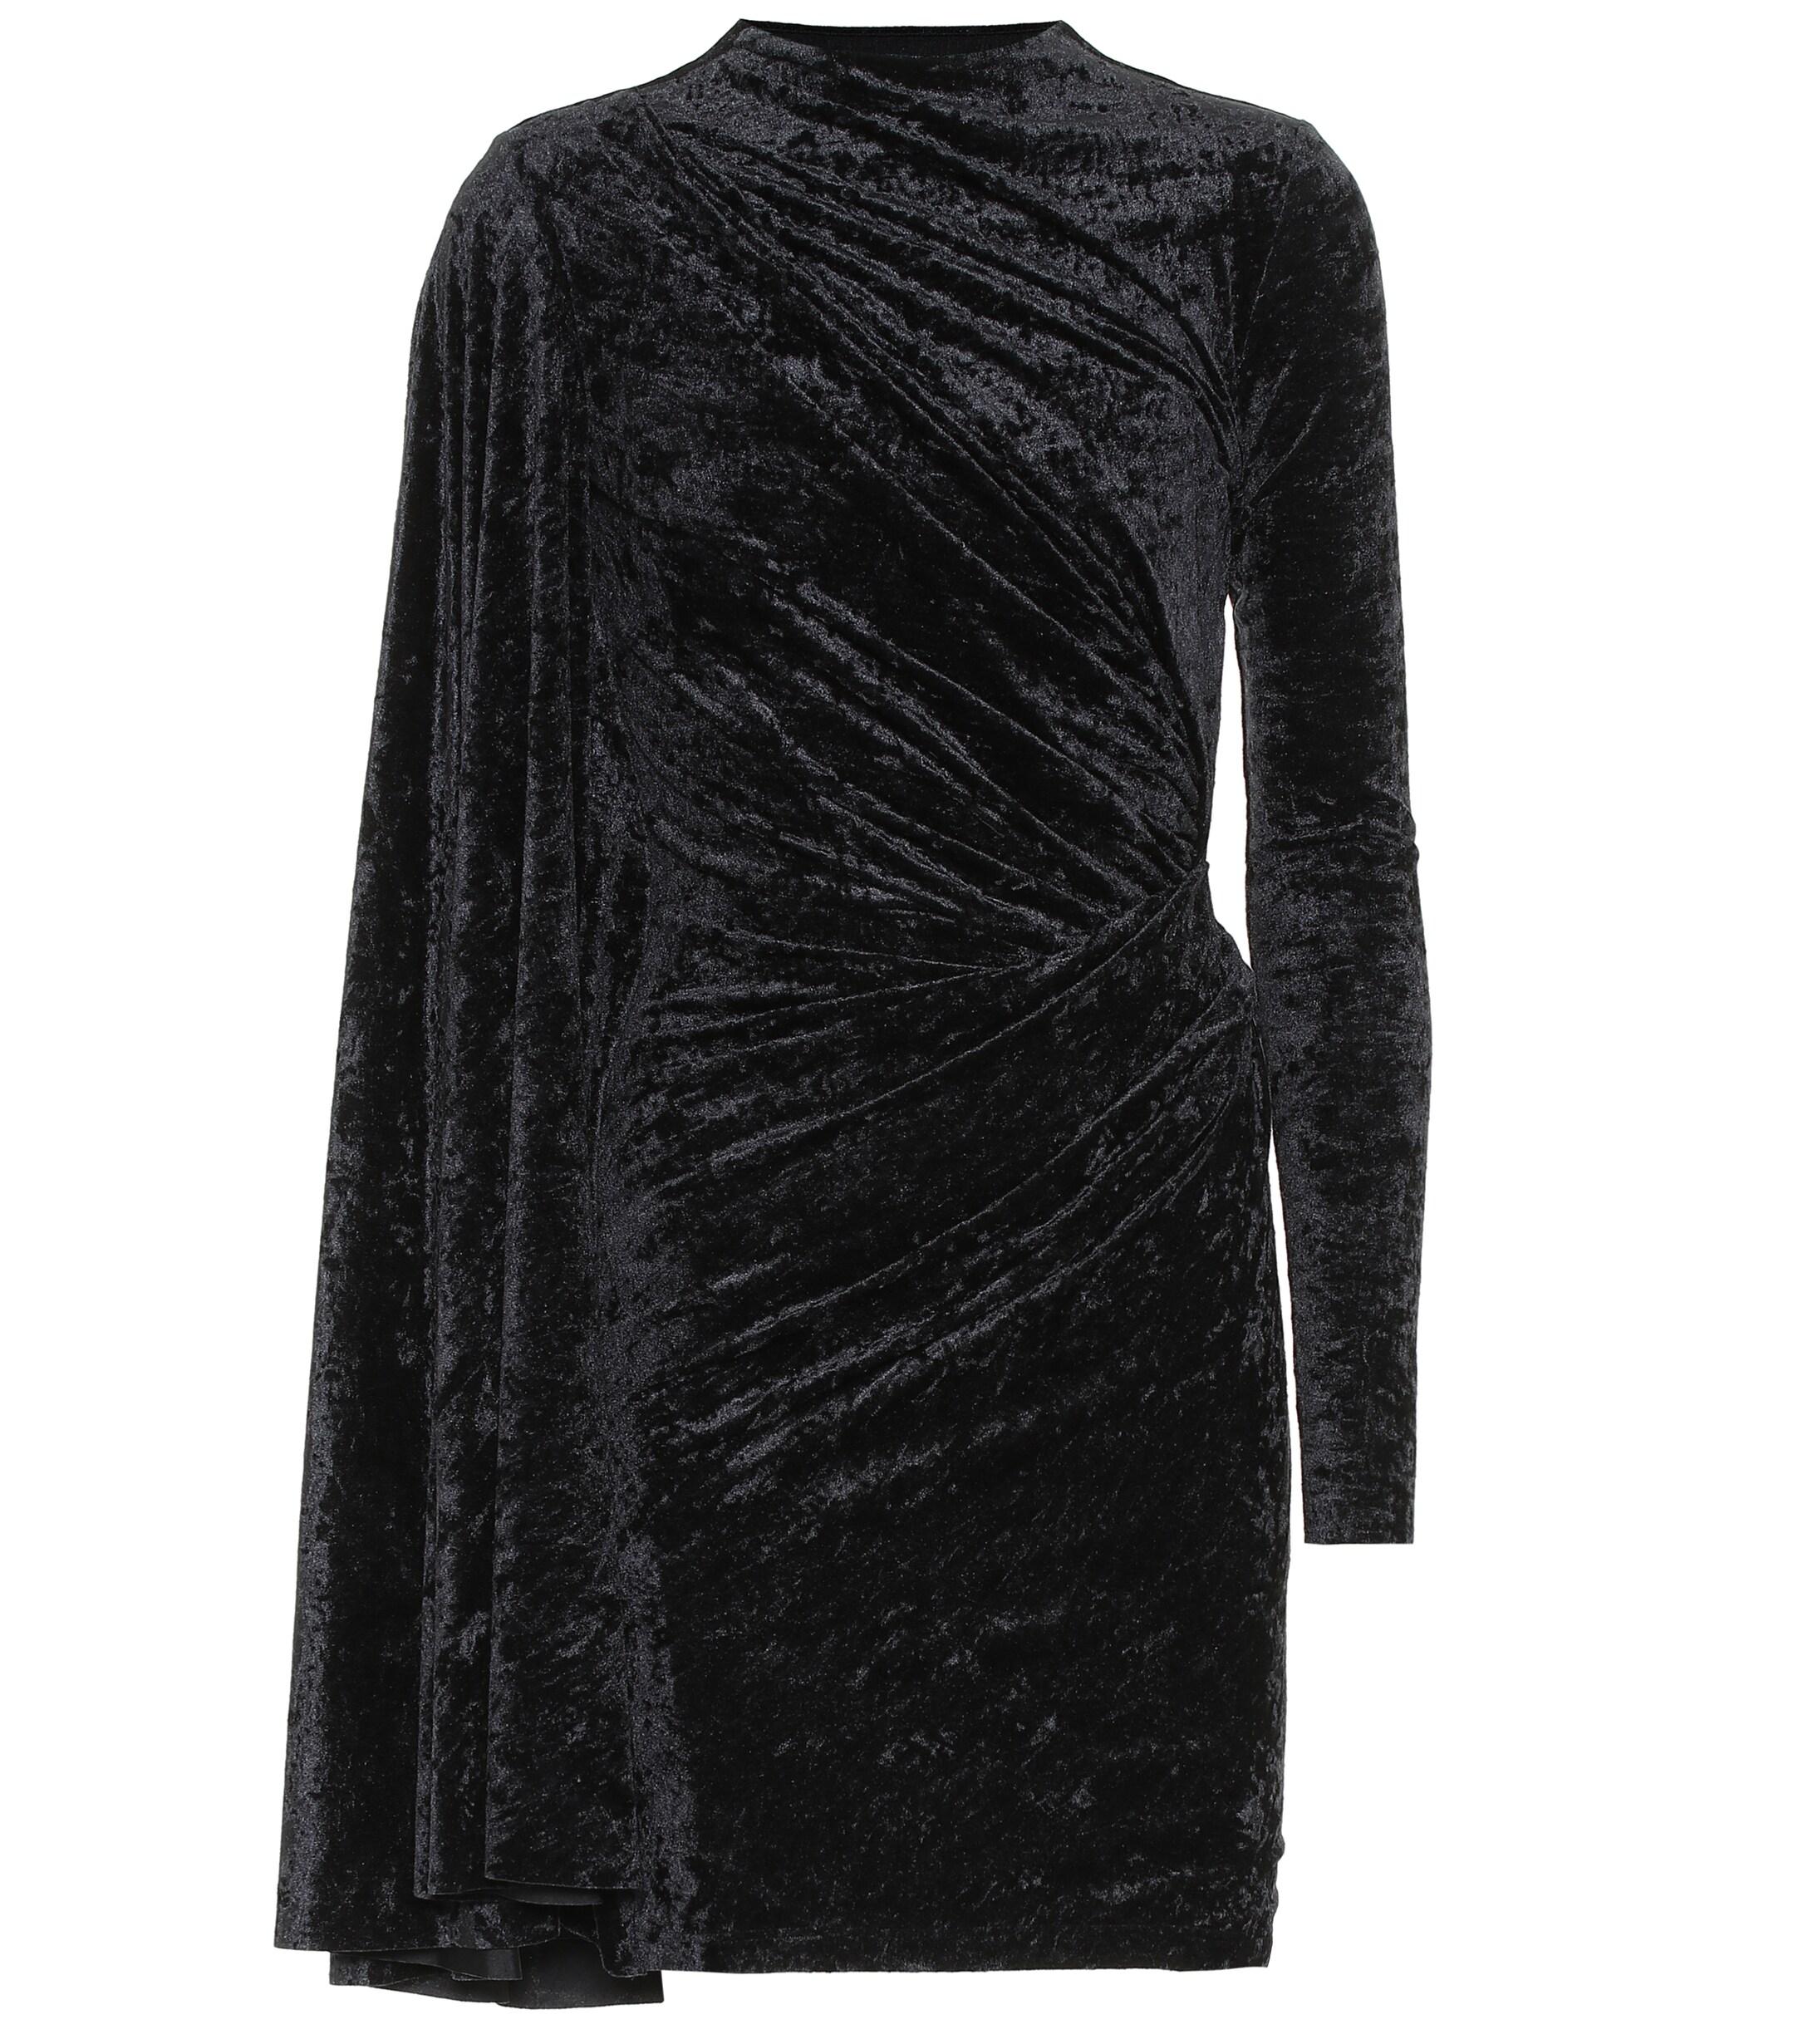 Balenciaga Crushed Velvet Minidress in Black - Lyst